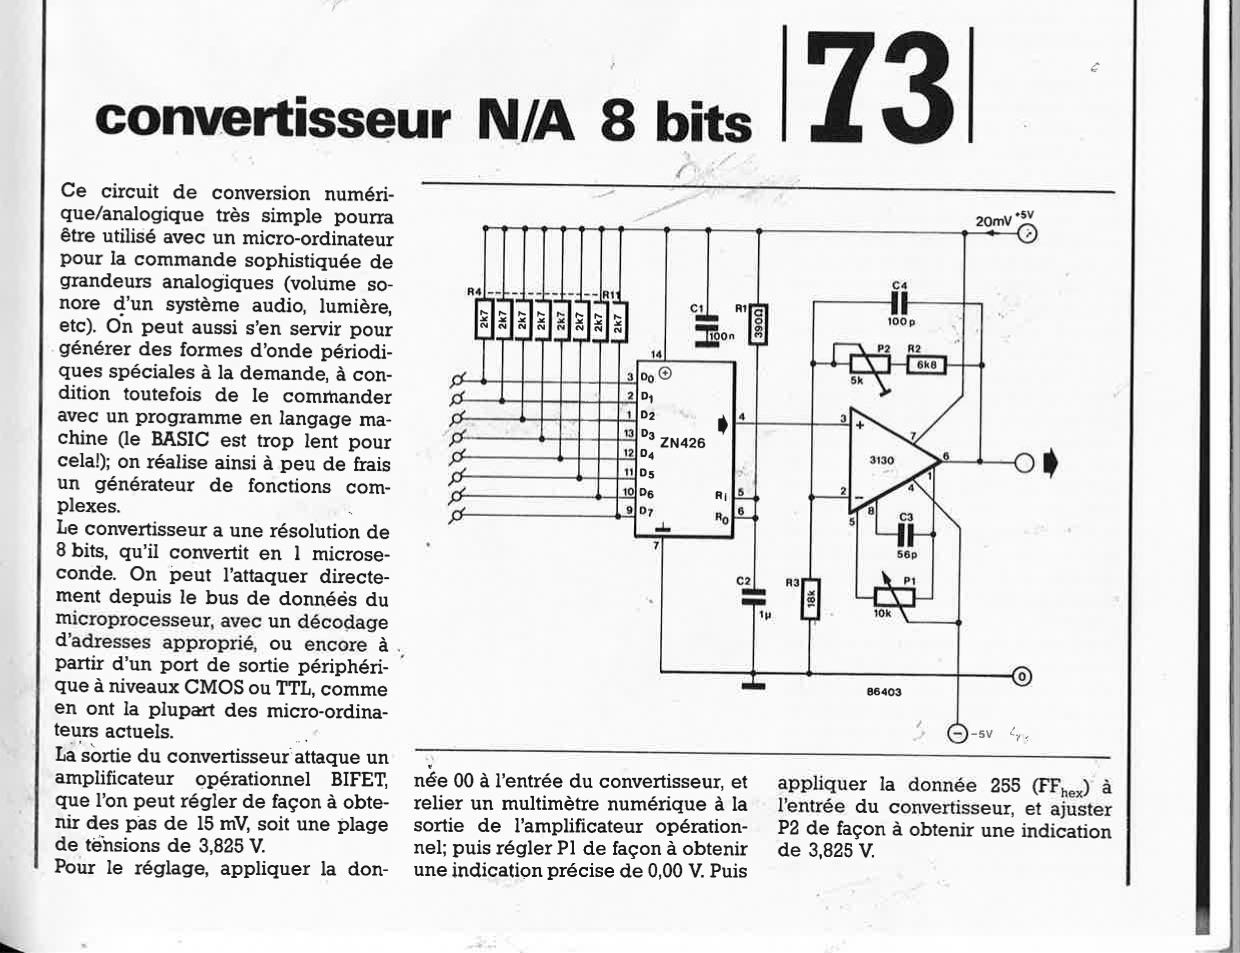 Convertisseur N / A 8 bits